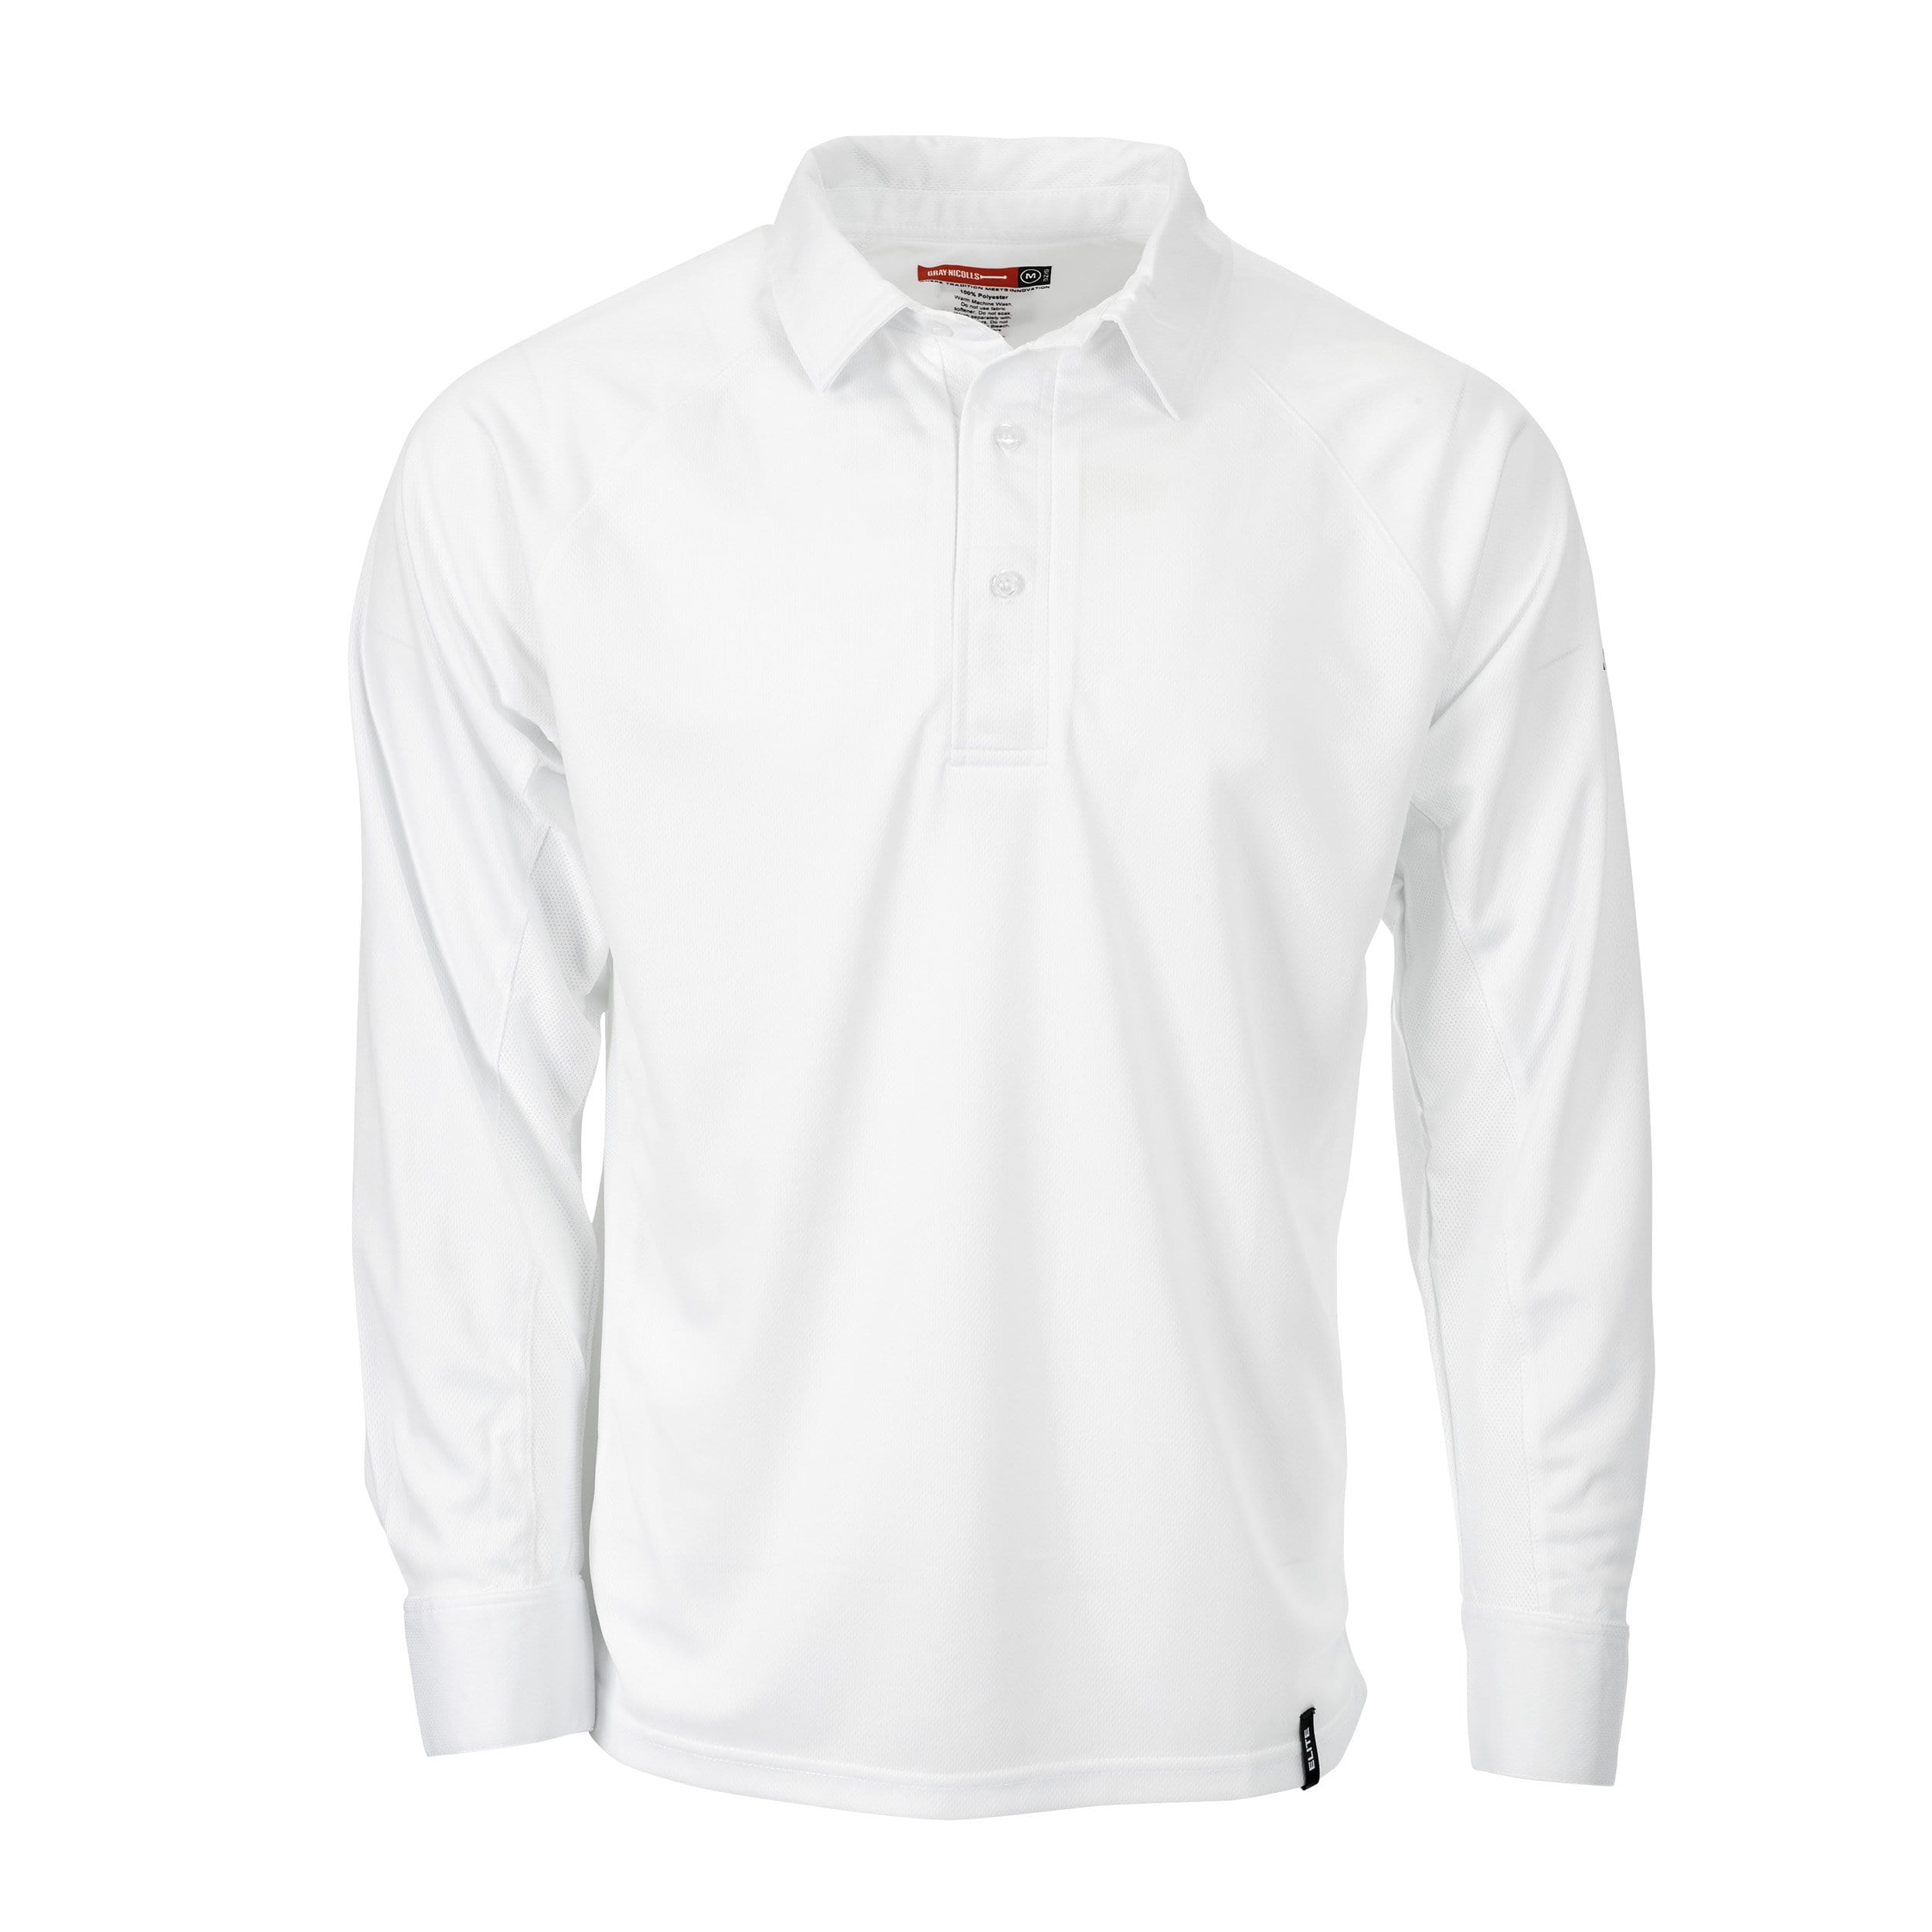 Gray Nicolls Clothing Gray-Nicolls Elite Long Sleeve White Cricket Shirt